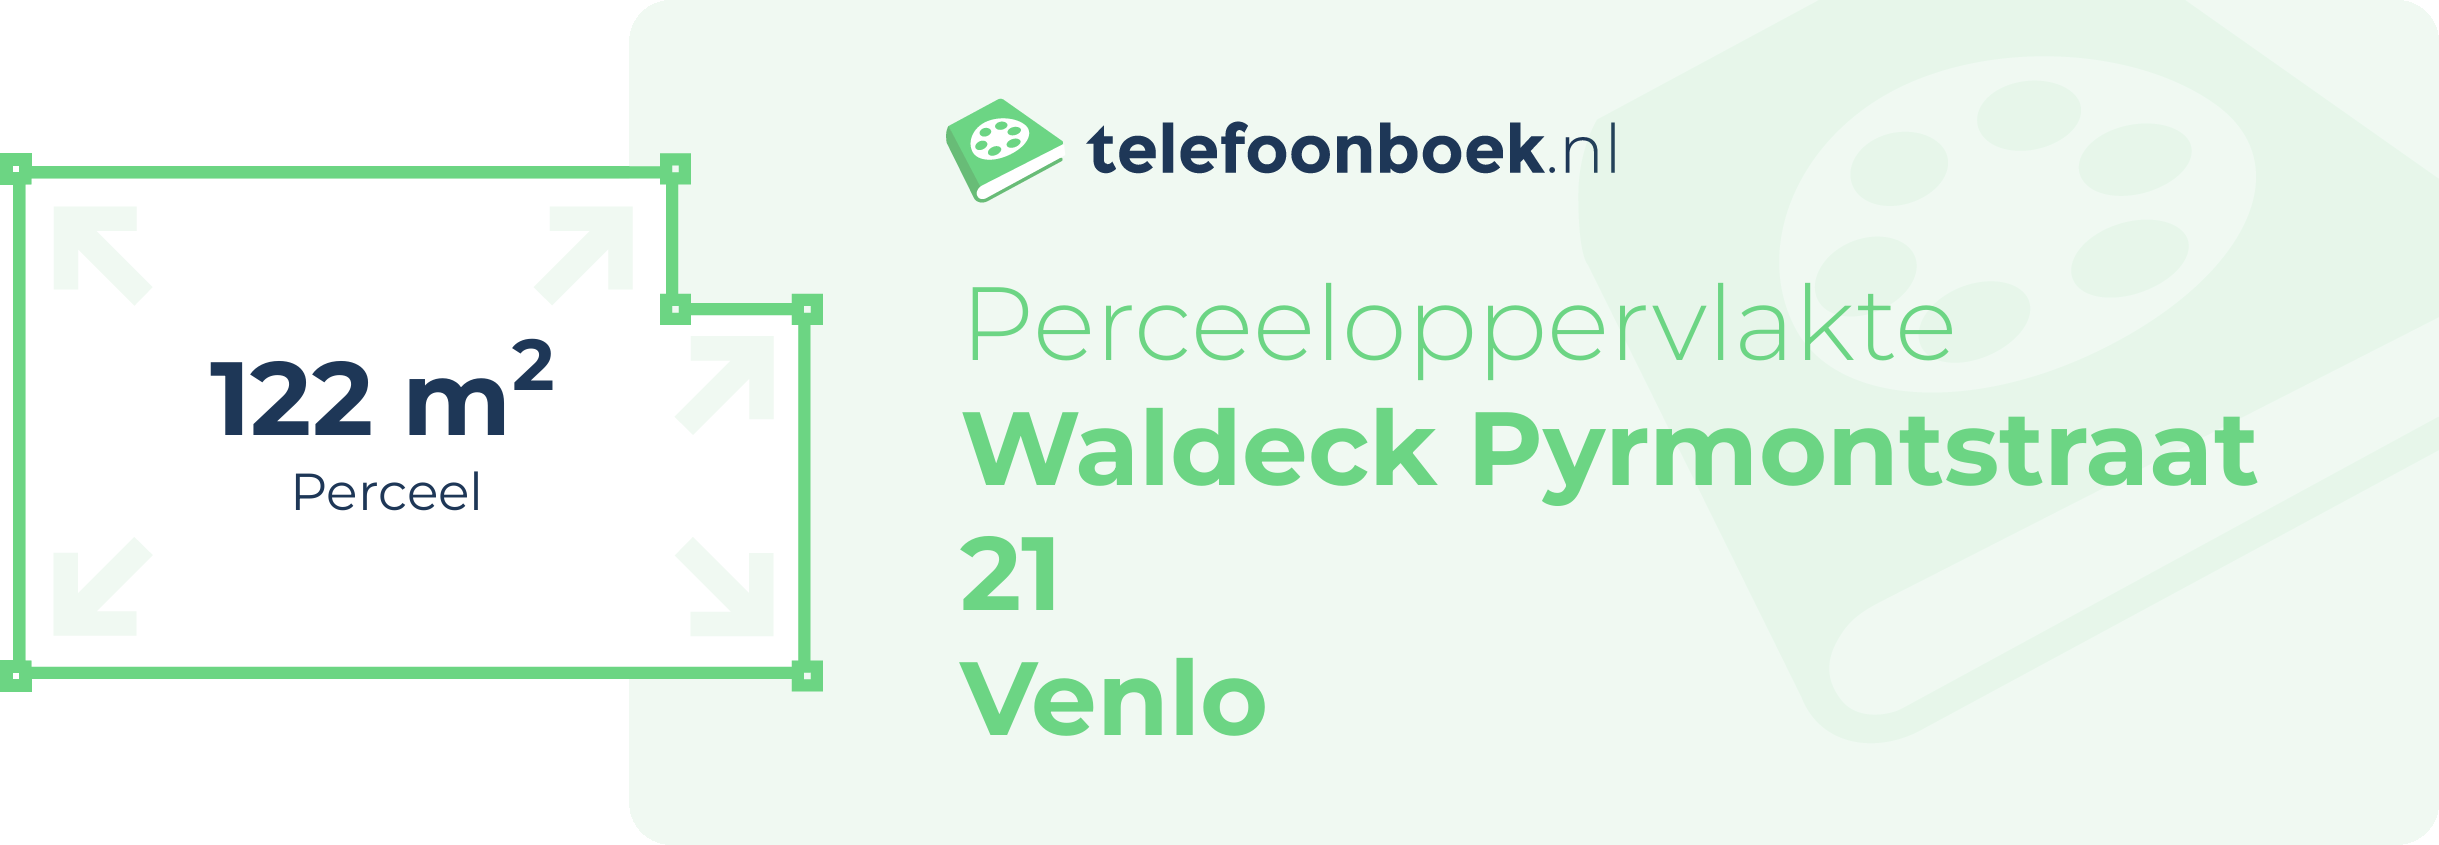 Perceeloppervlakte Waldeck Pyrmontstraat 21 Venlo